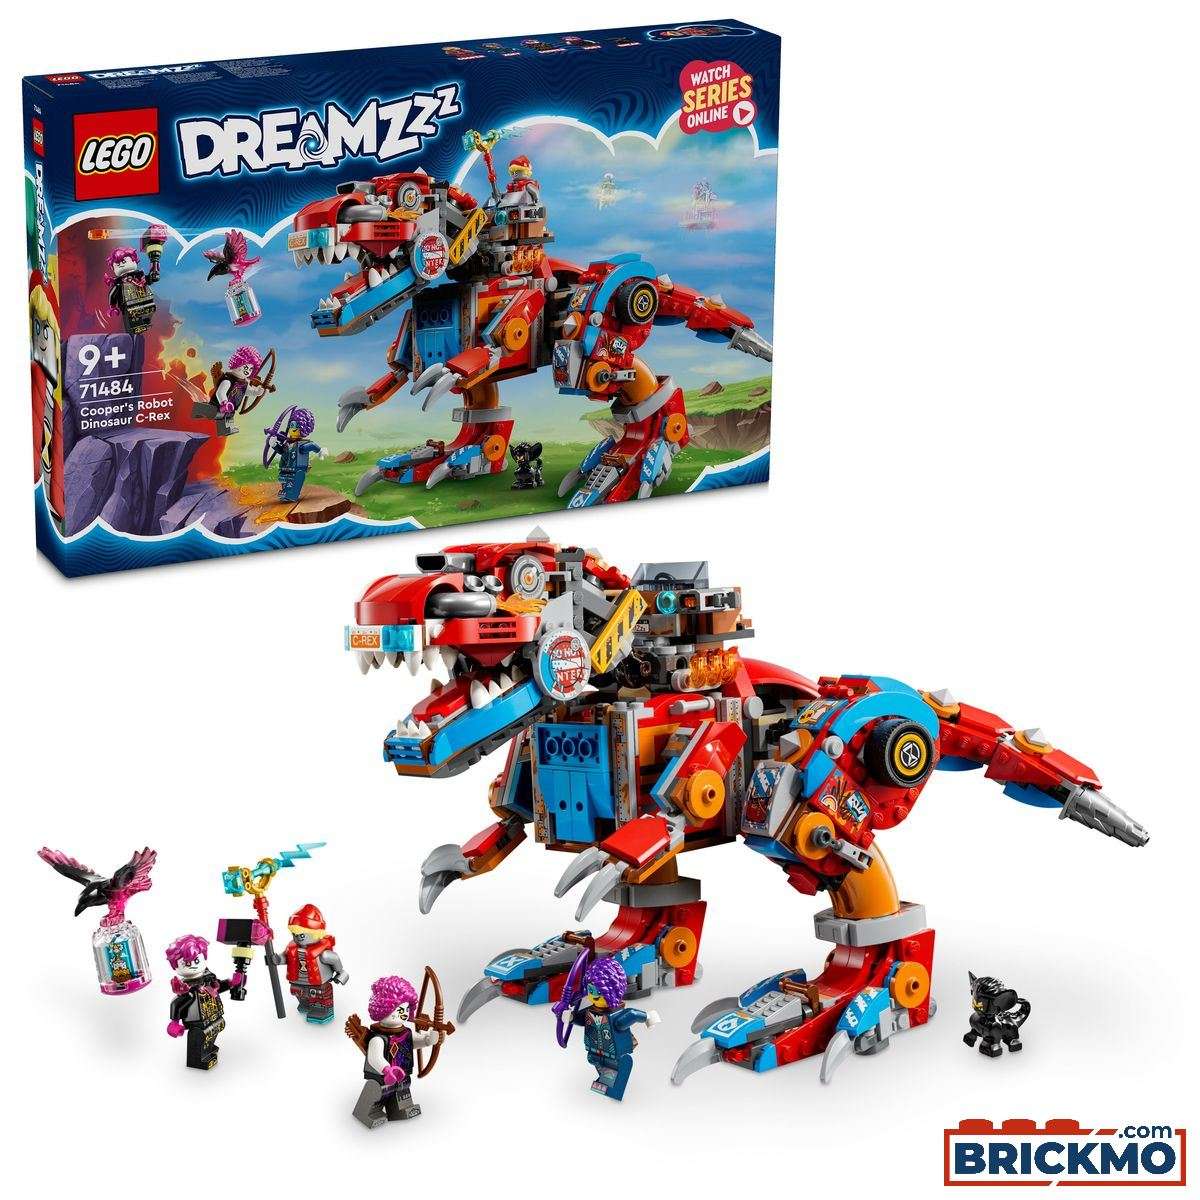 LEGO DreamZzz 71484 Coopers Dino-Mech C-Rex 71484